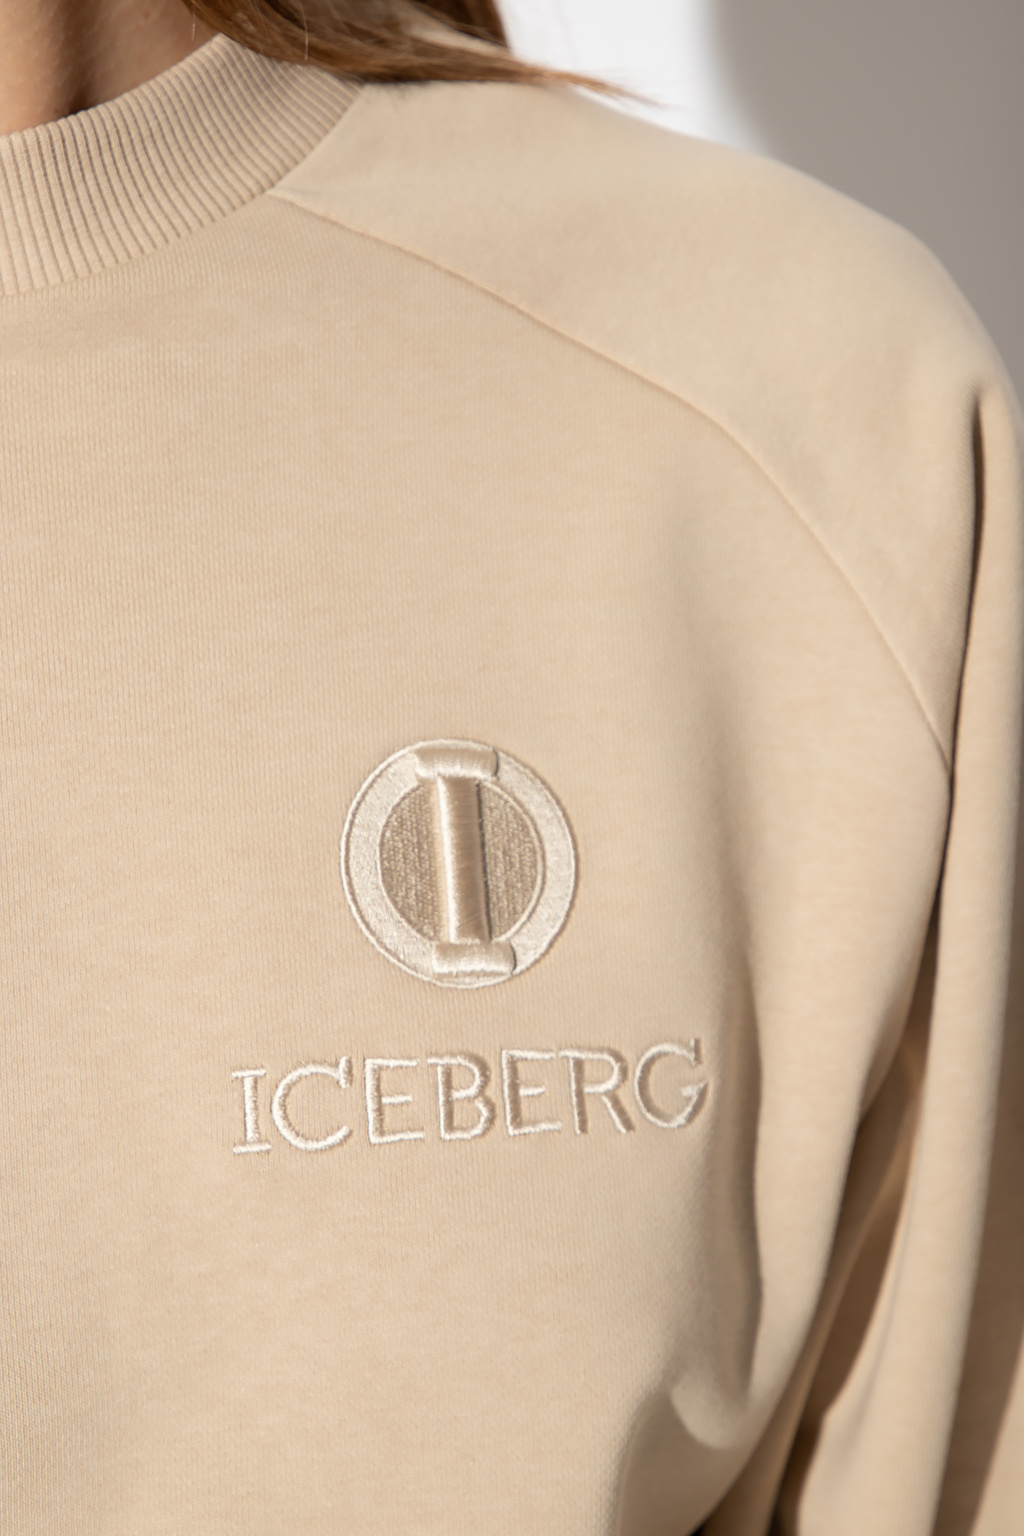 Iceberg plain sweatshirt with logo